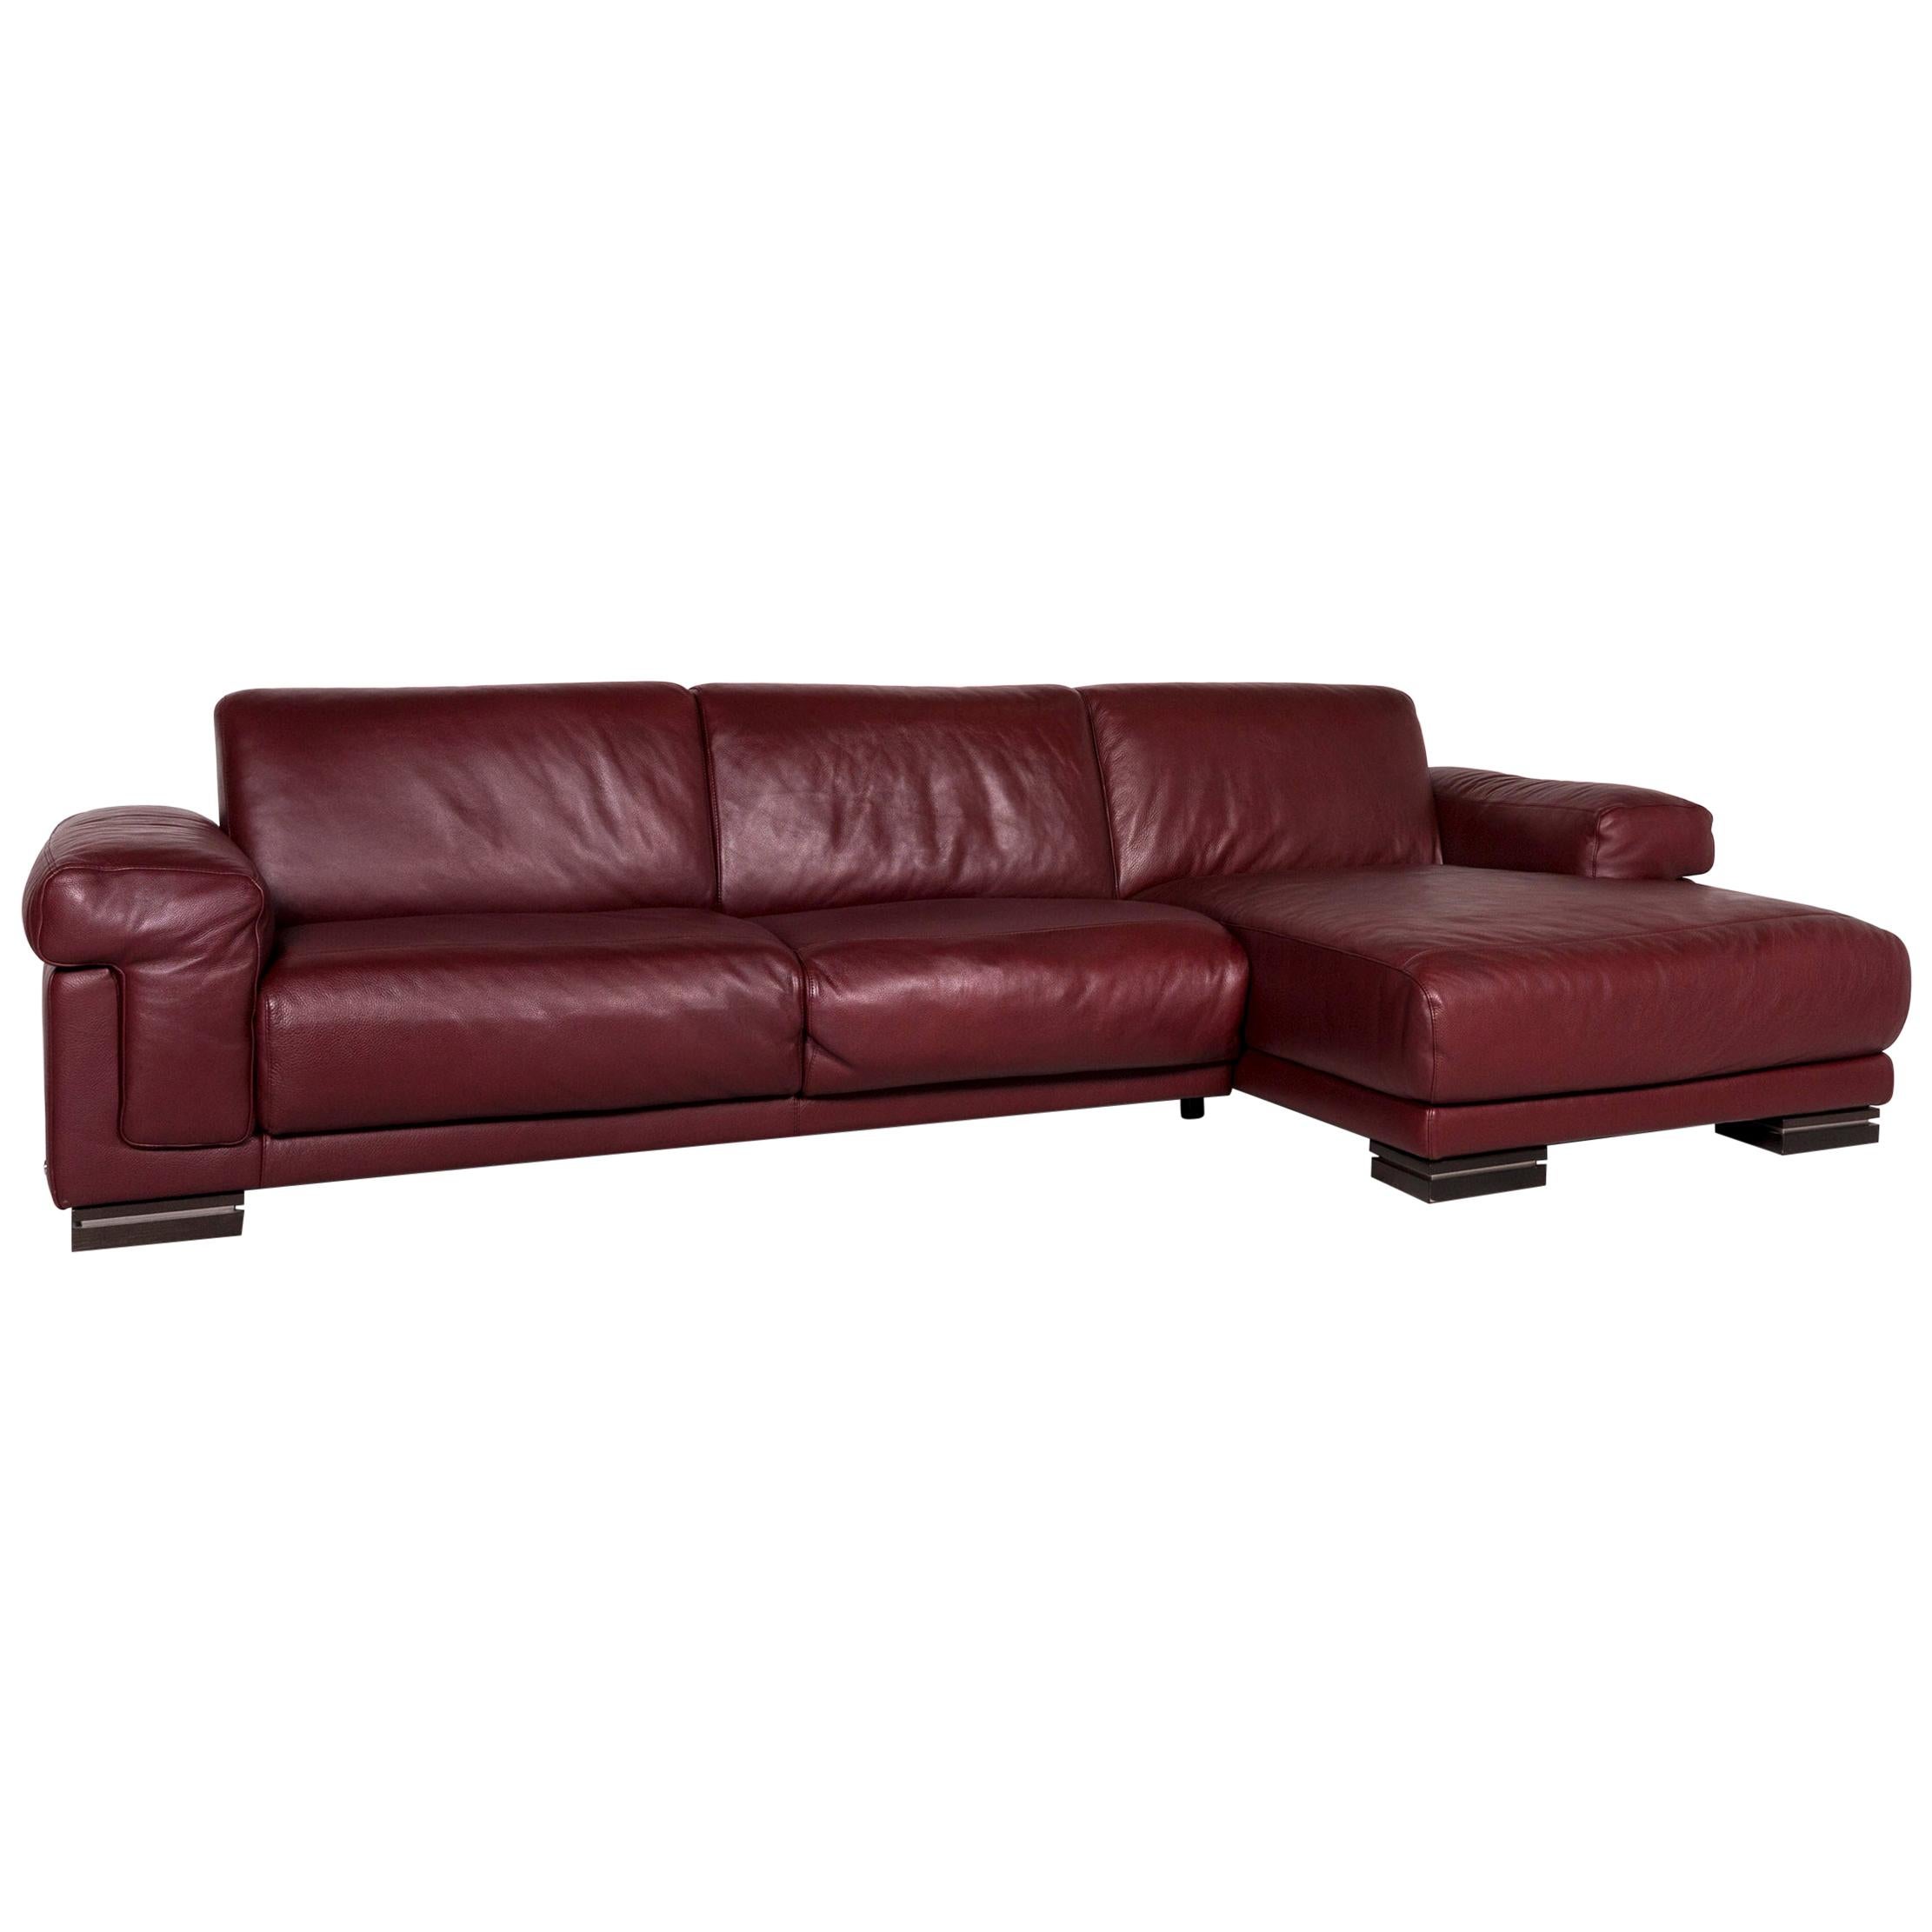 Natuzzi Leather Corner Sofa Bordeaux Red Sofa Couch For Sale